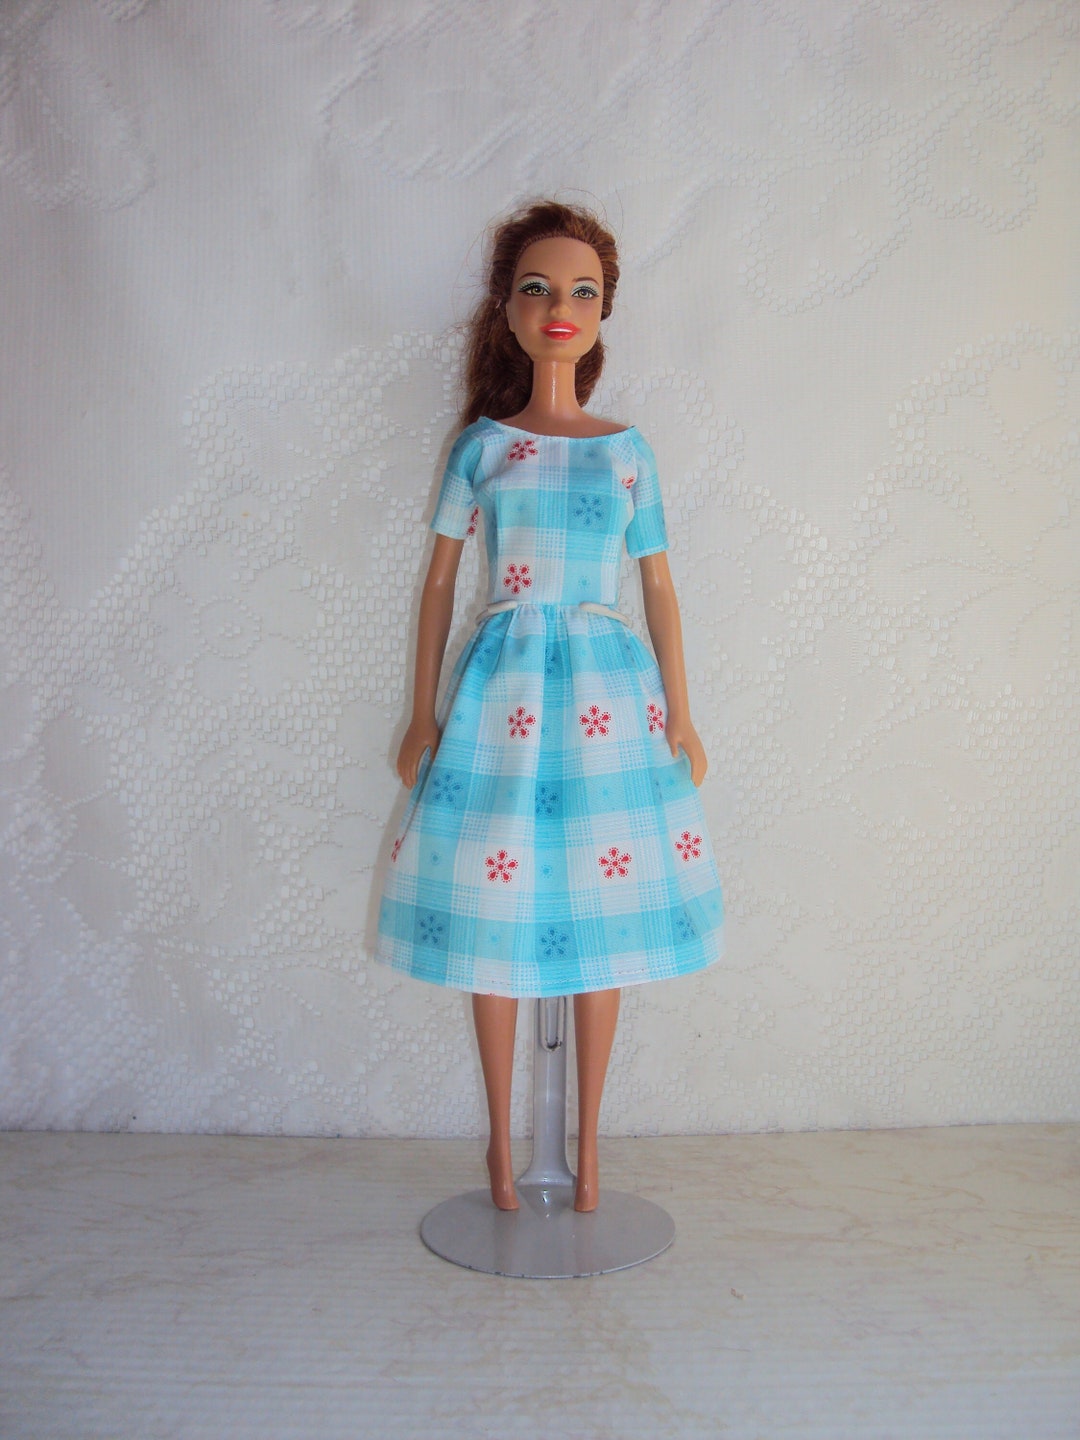 Barbie Dress Blue and White Checks Cotton Handmade - Etsy